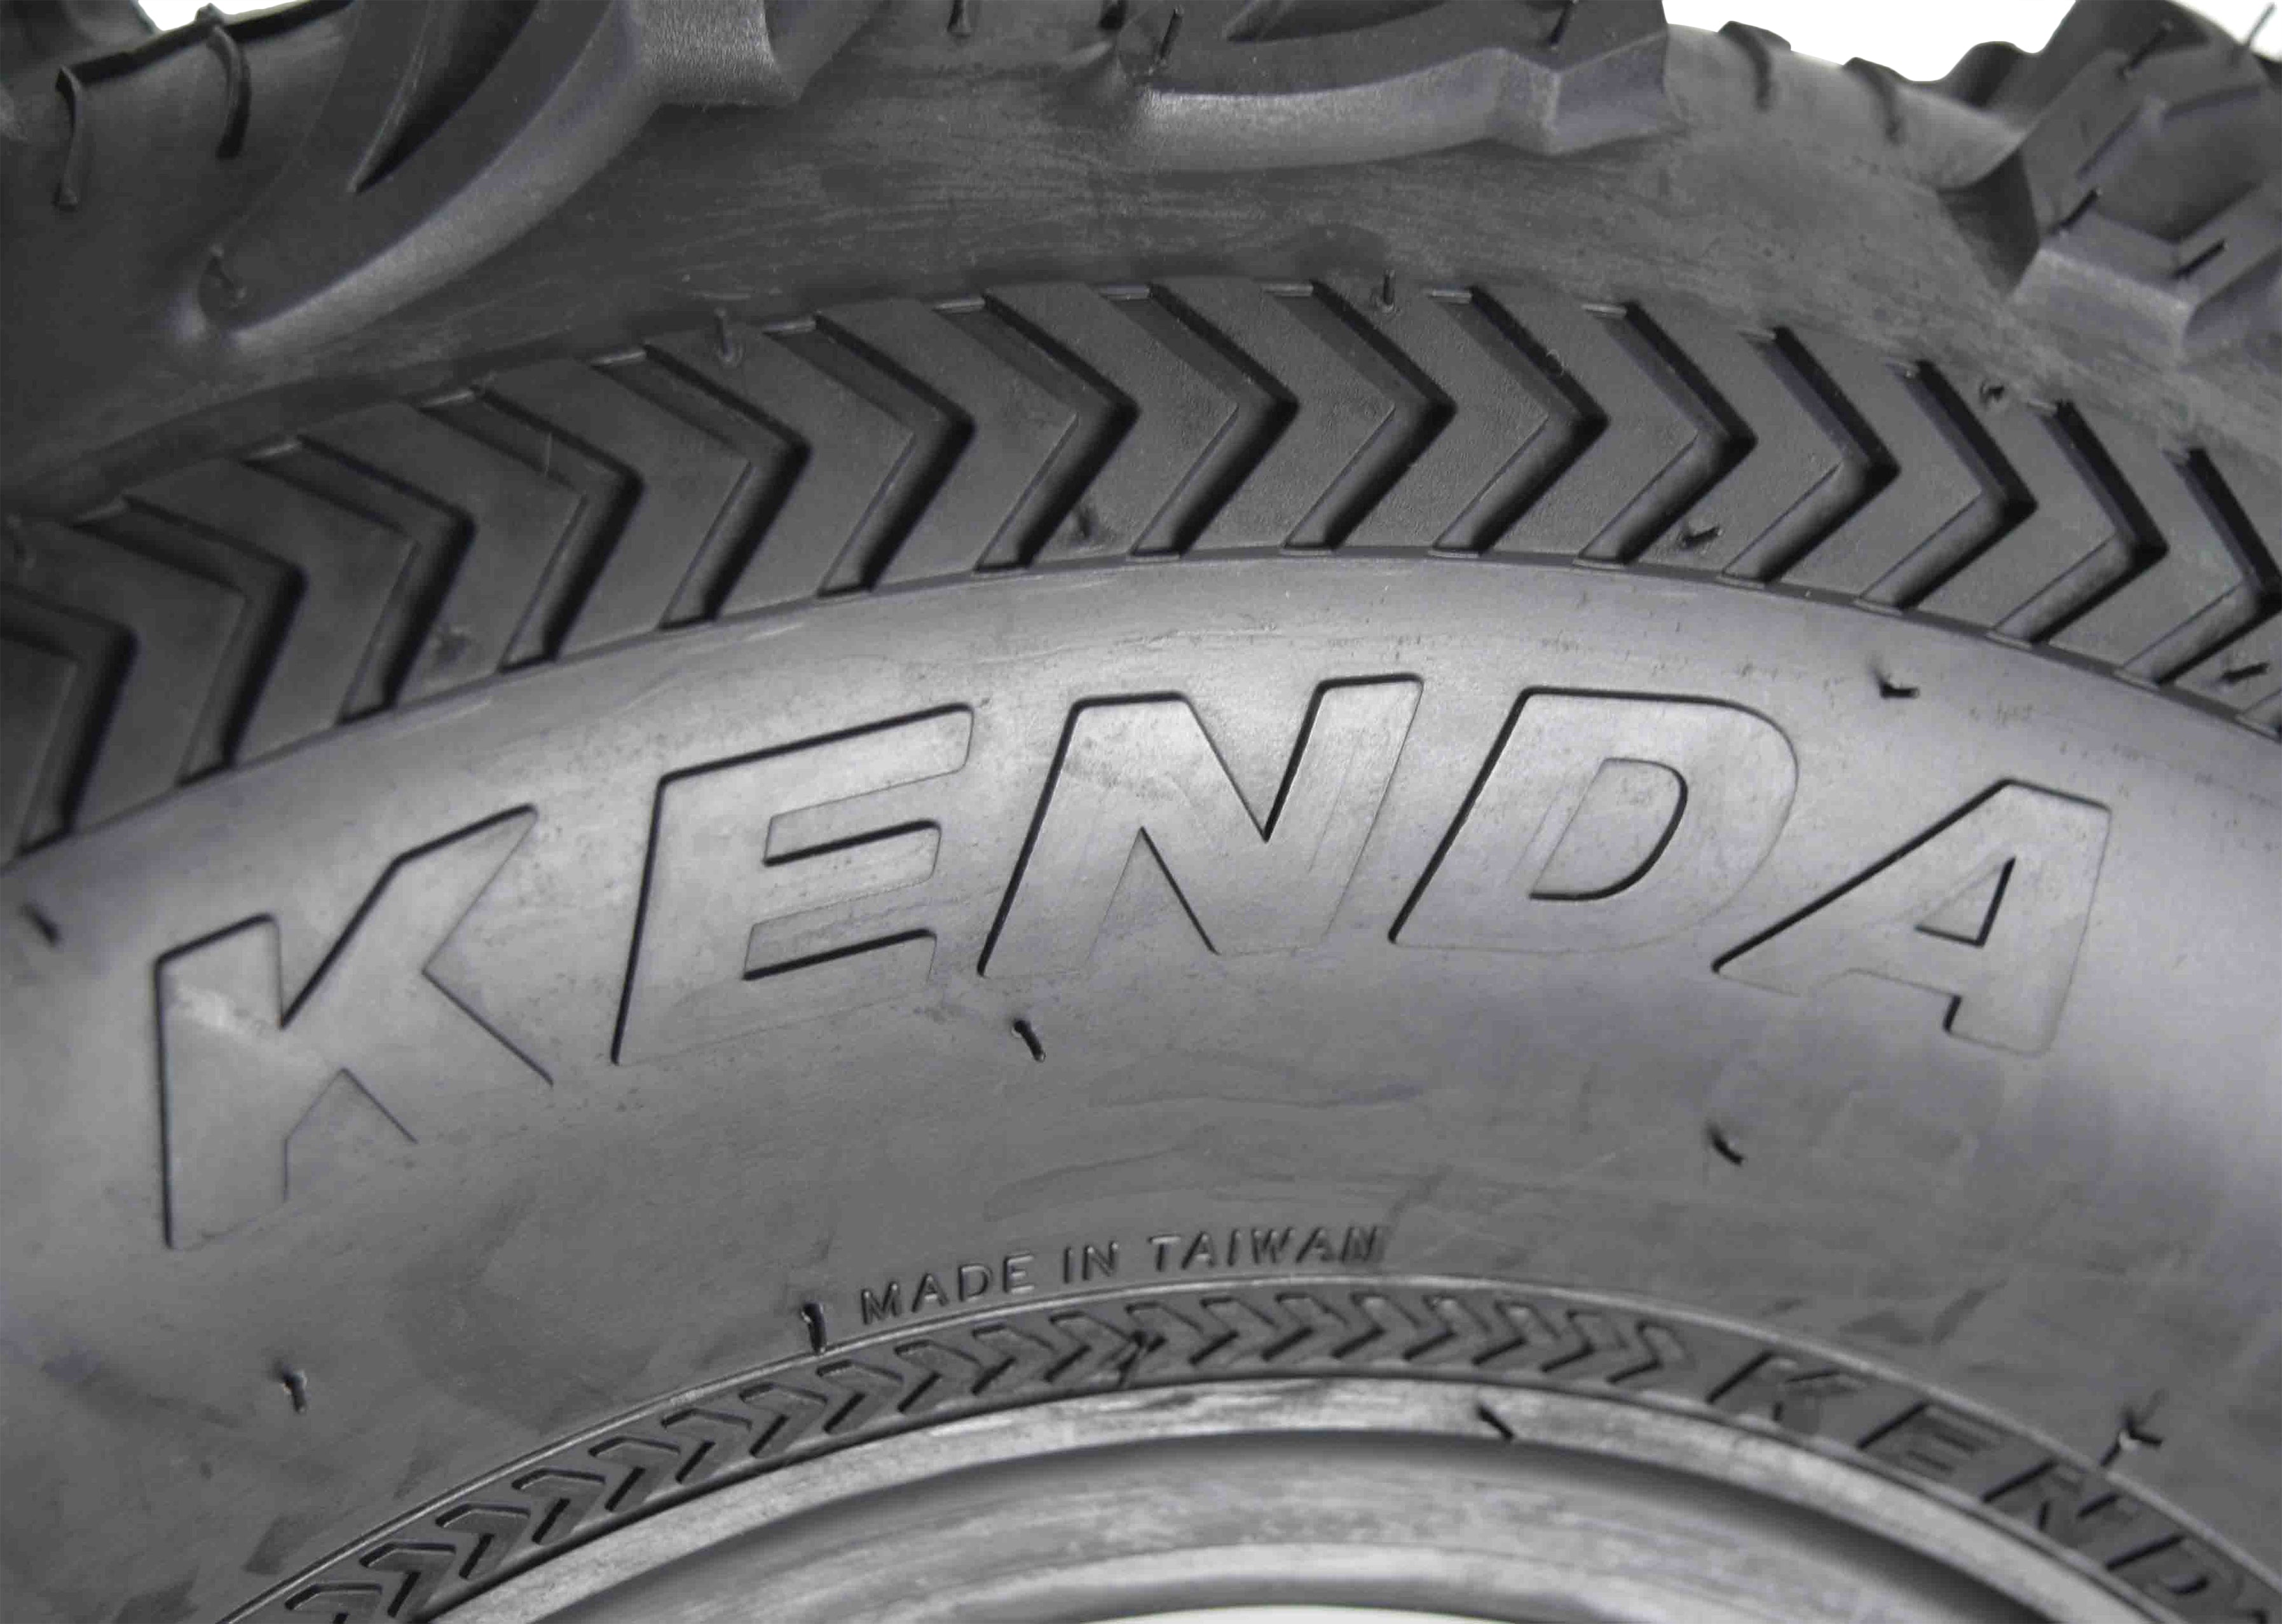 Kenda Bear Claw EX K573 23x10-10 Rear ATV UTV Tire 6 PLY Single Tire